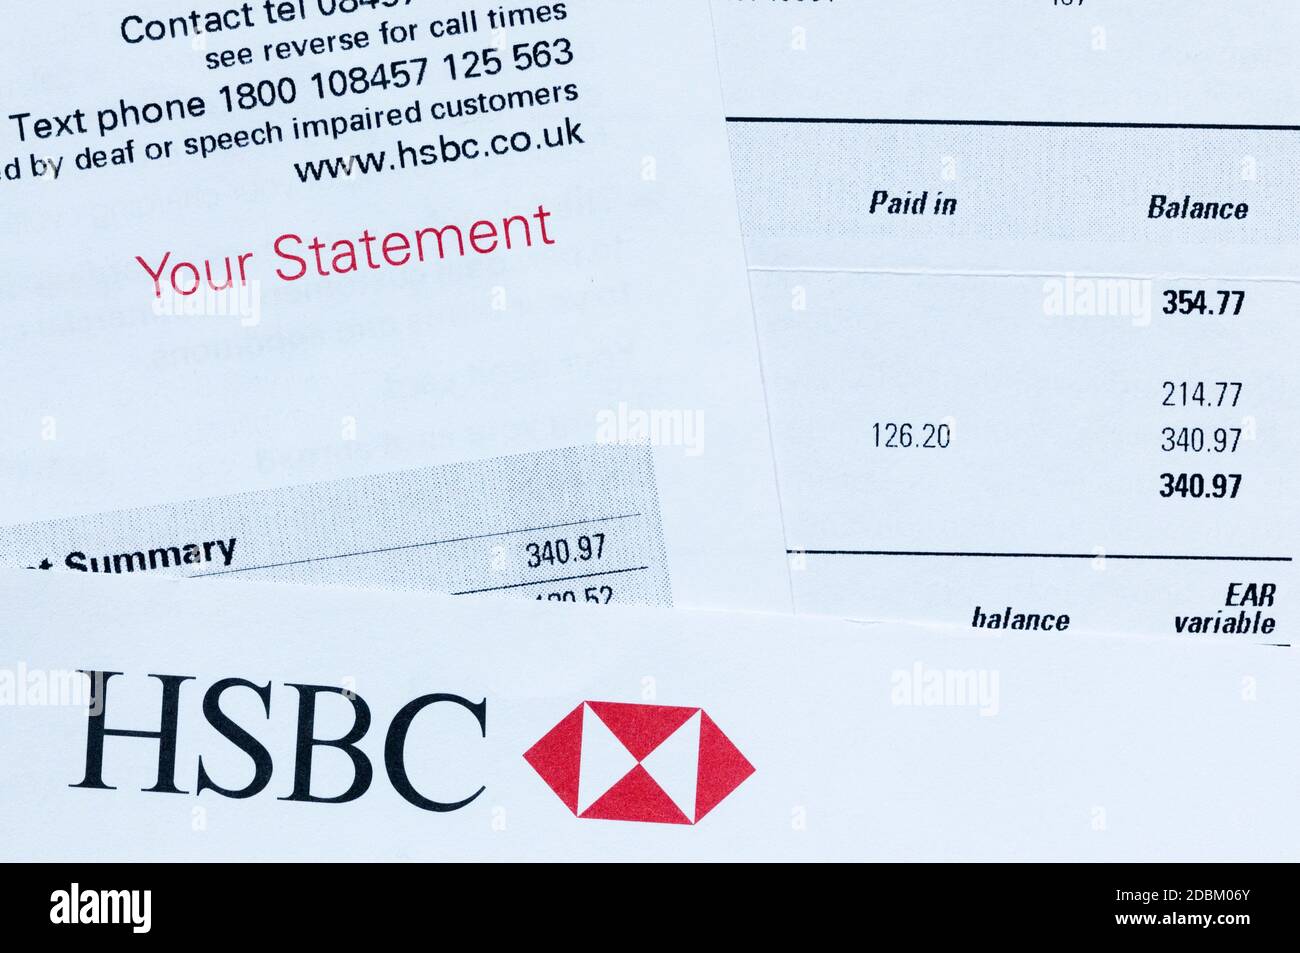 HSBC Bank Statement. Stock Photo